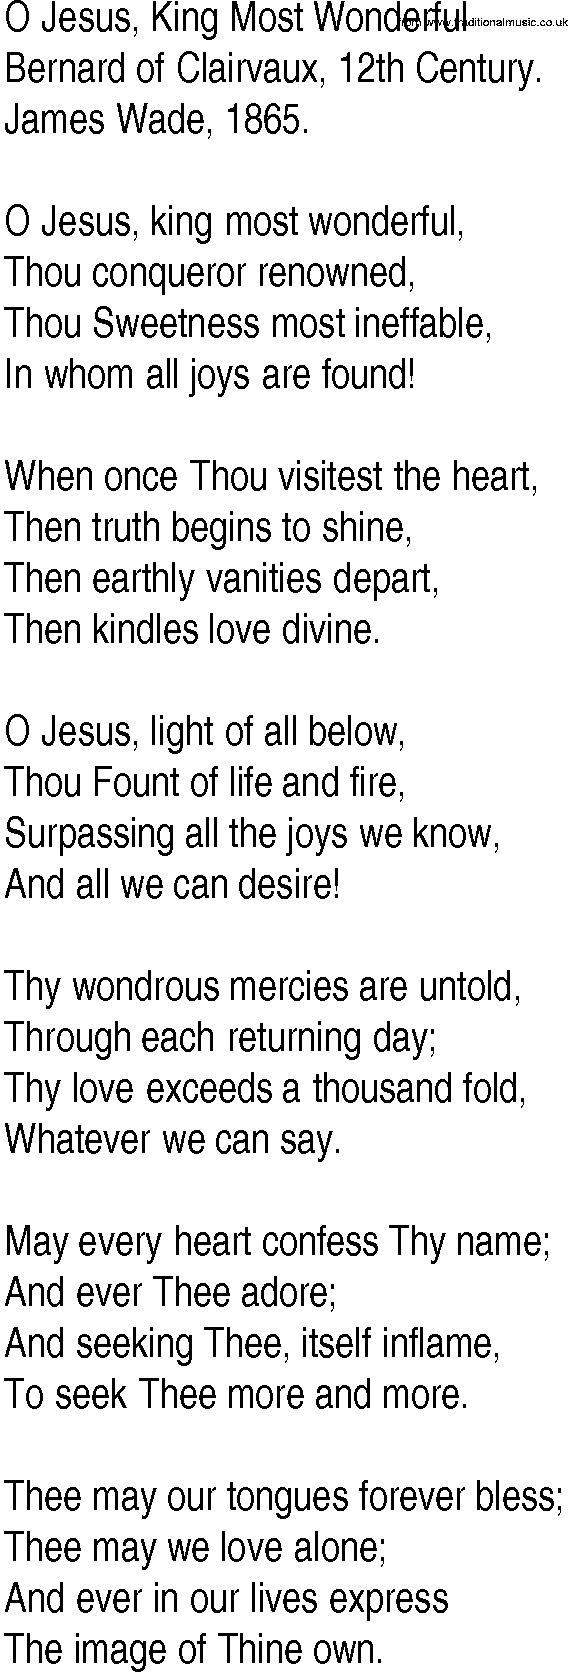 Hymn and Gospel Song: O Jesus, King Most Wonderful by Bernard of Clairvaux lyrics